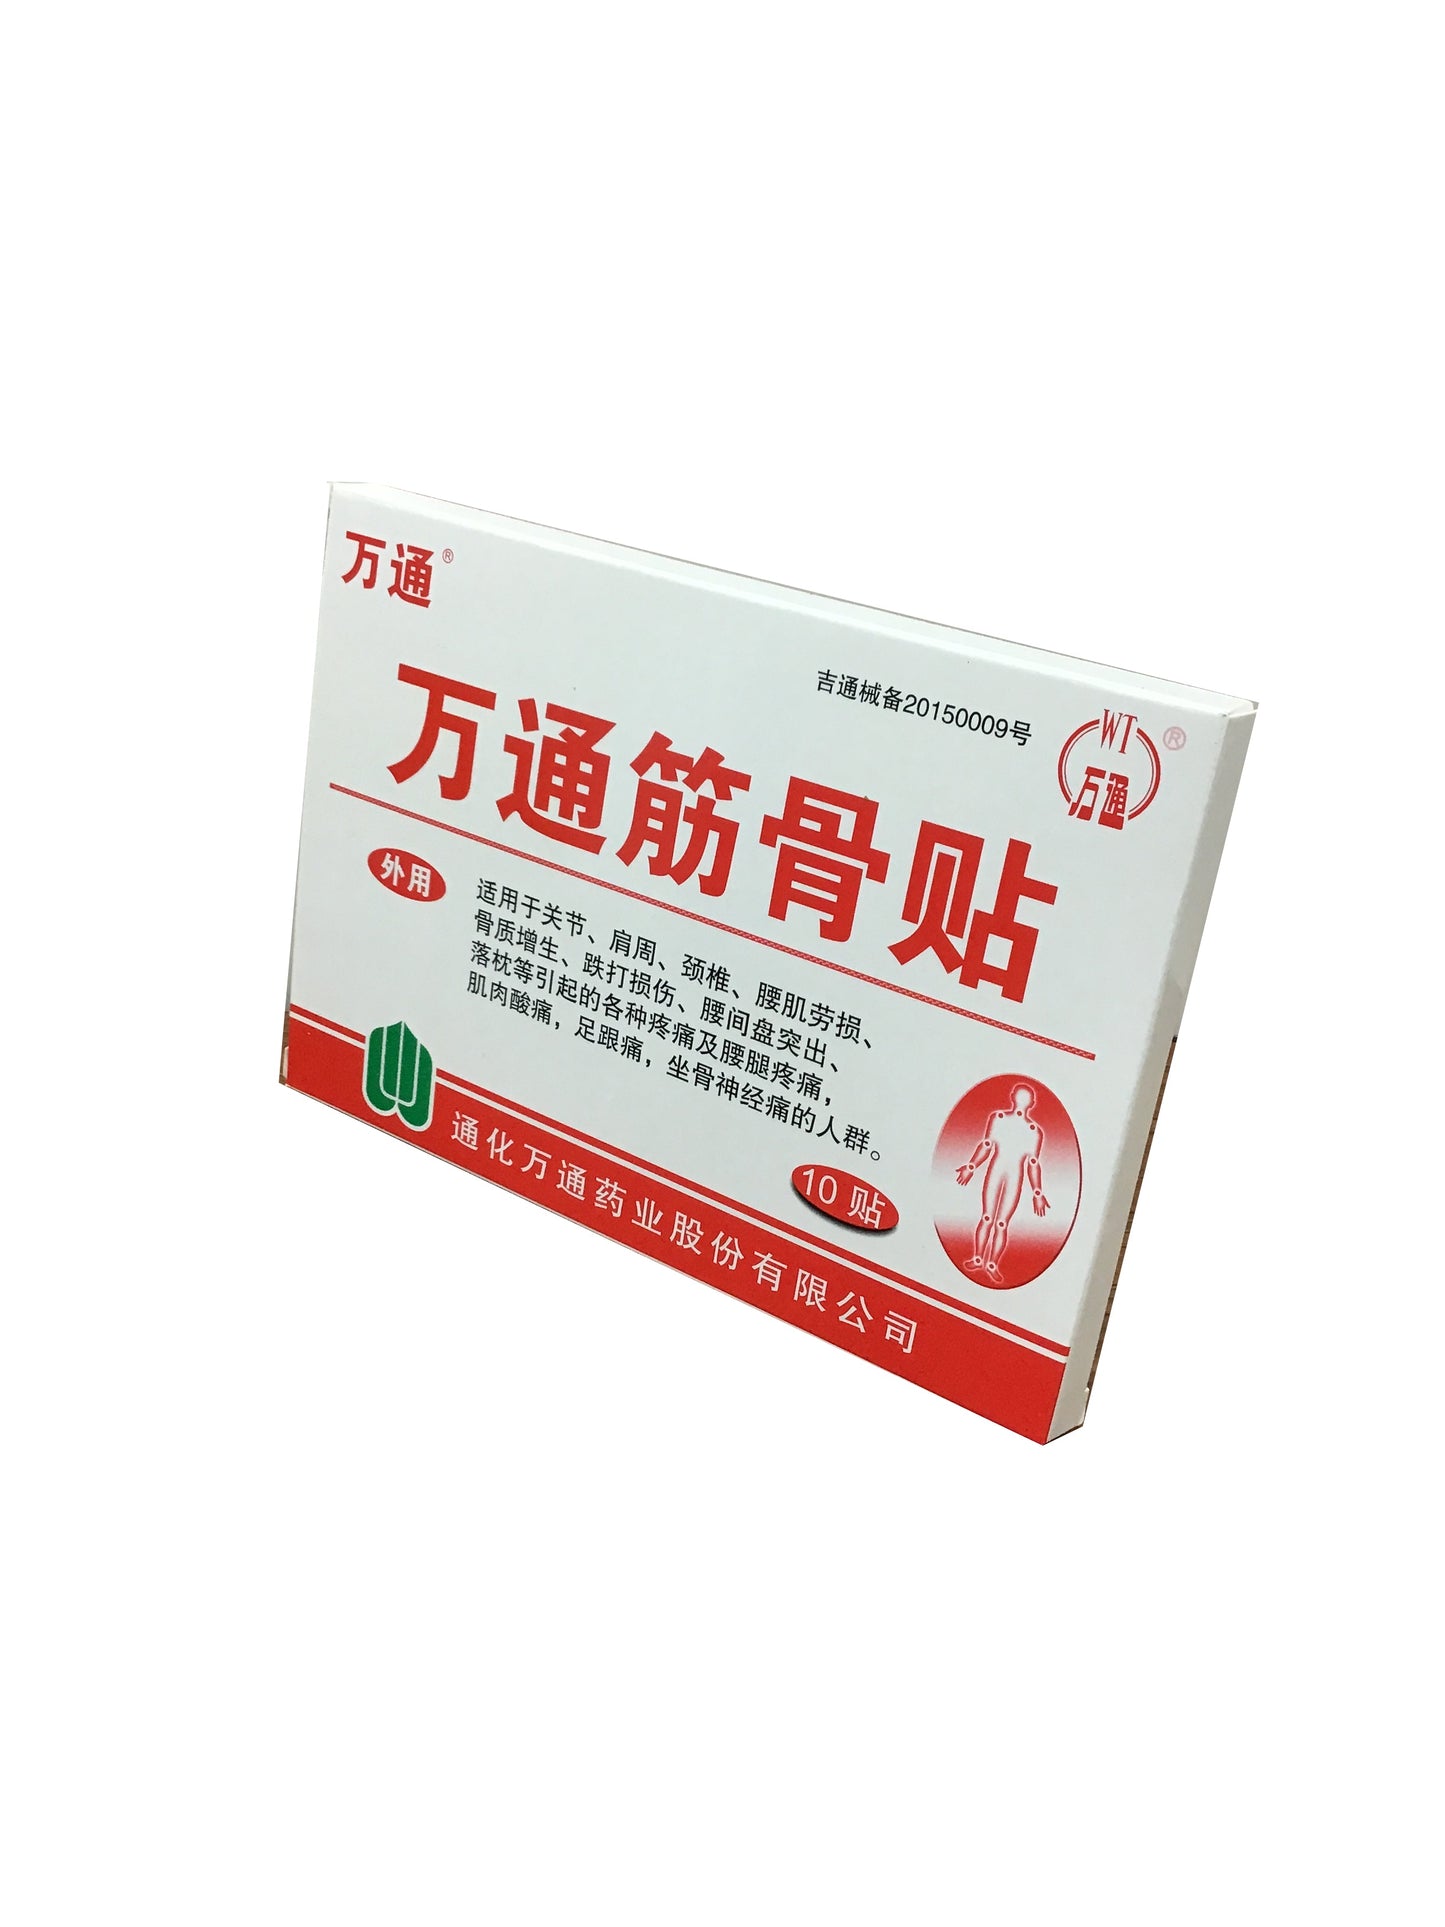 Wantong Jingu Pain Relieve Patch（10 Patches）万通筋骨贴（10贴装）